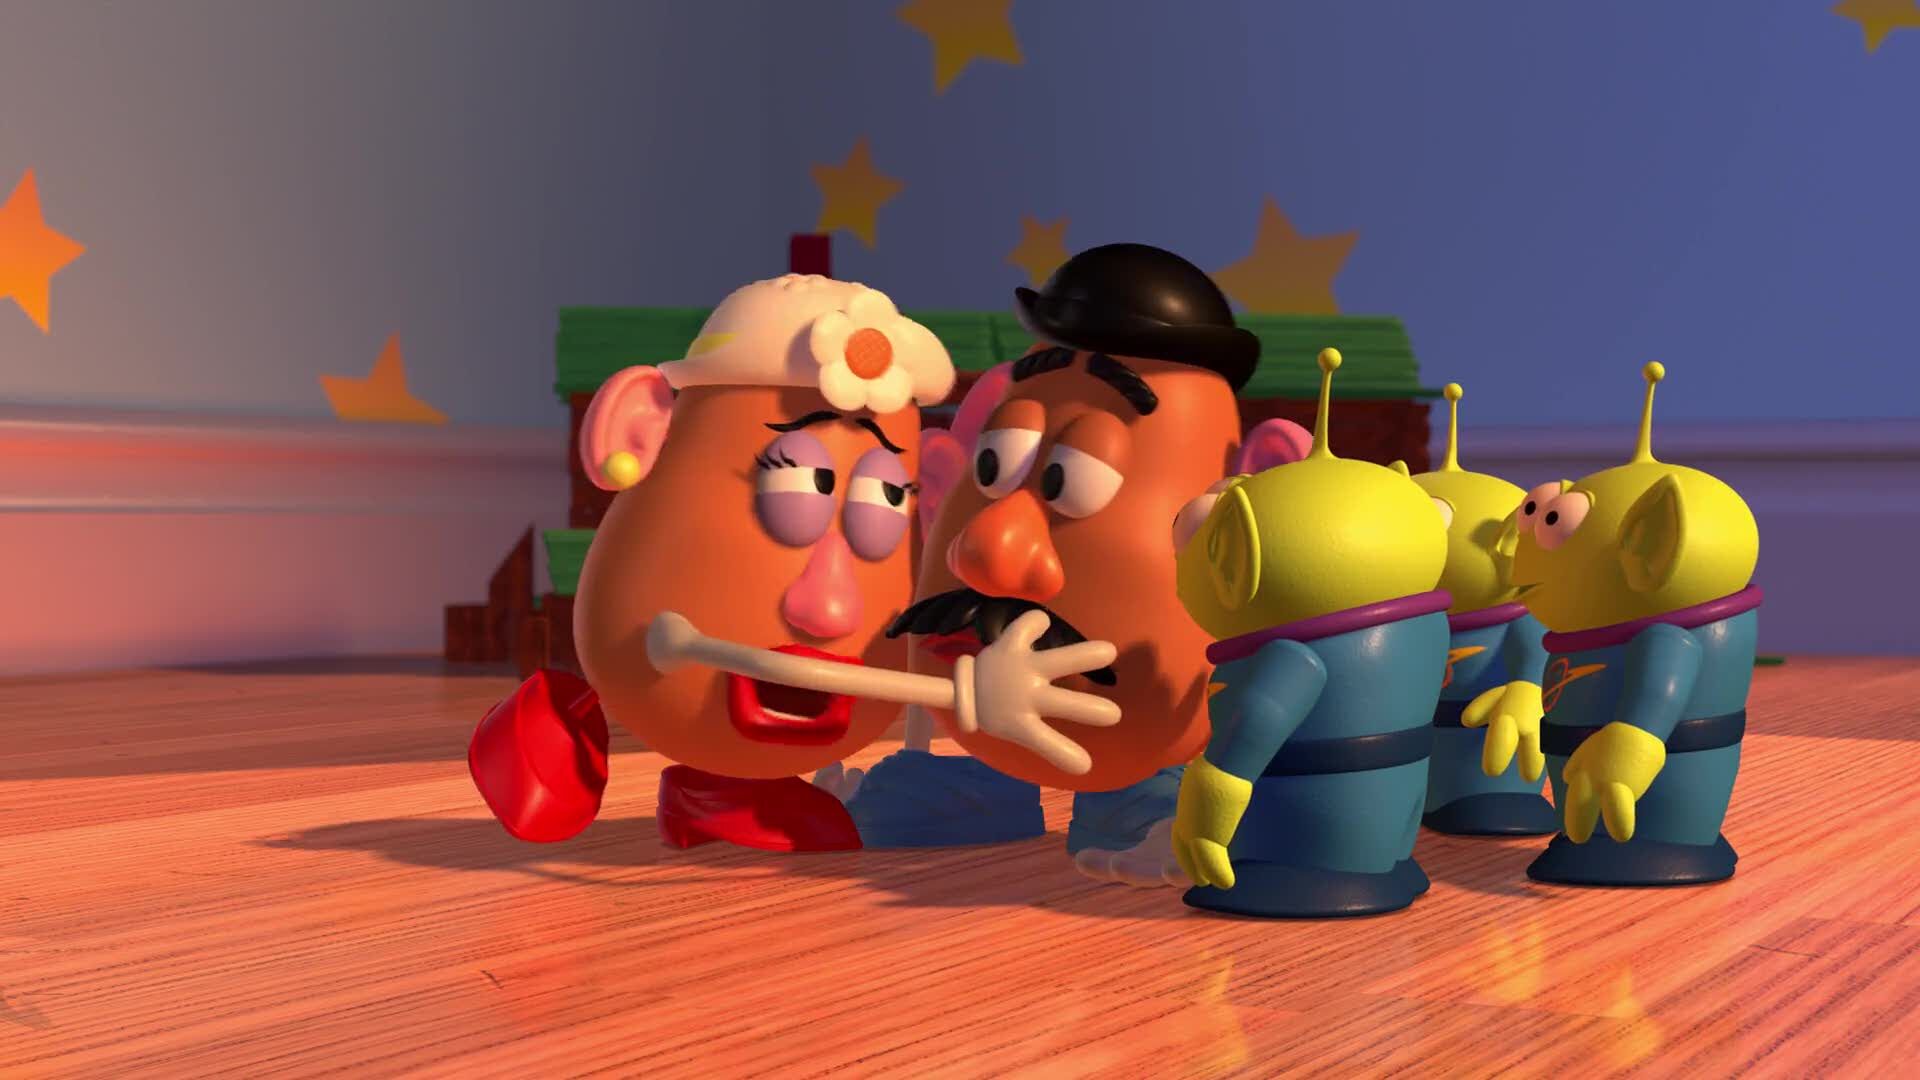 Mr. Potato Head, Pixar Wiki